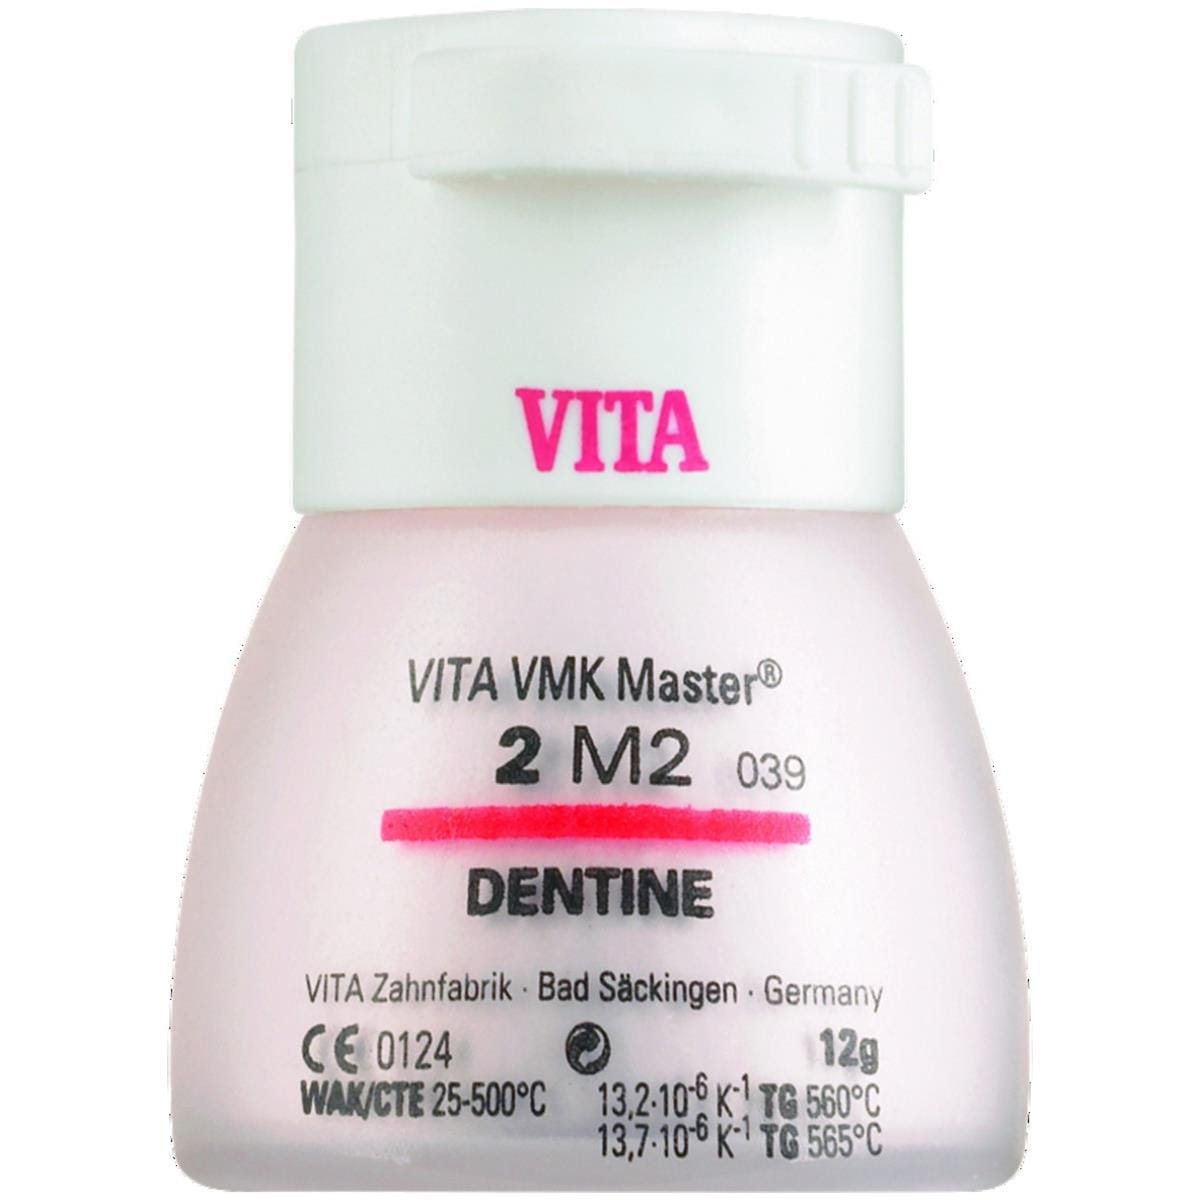 VMK Master VITA - Dentine - 3L1,5 - Le flacon de 12 g